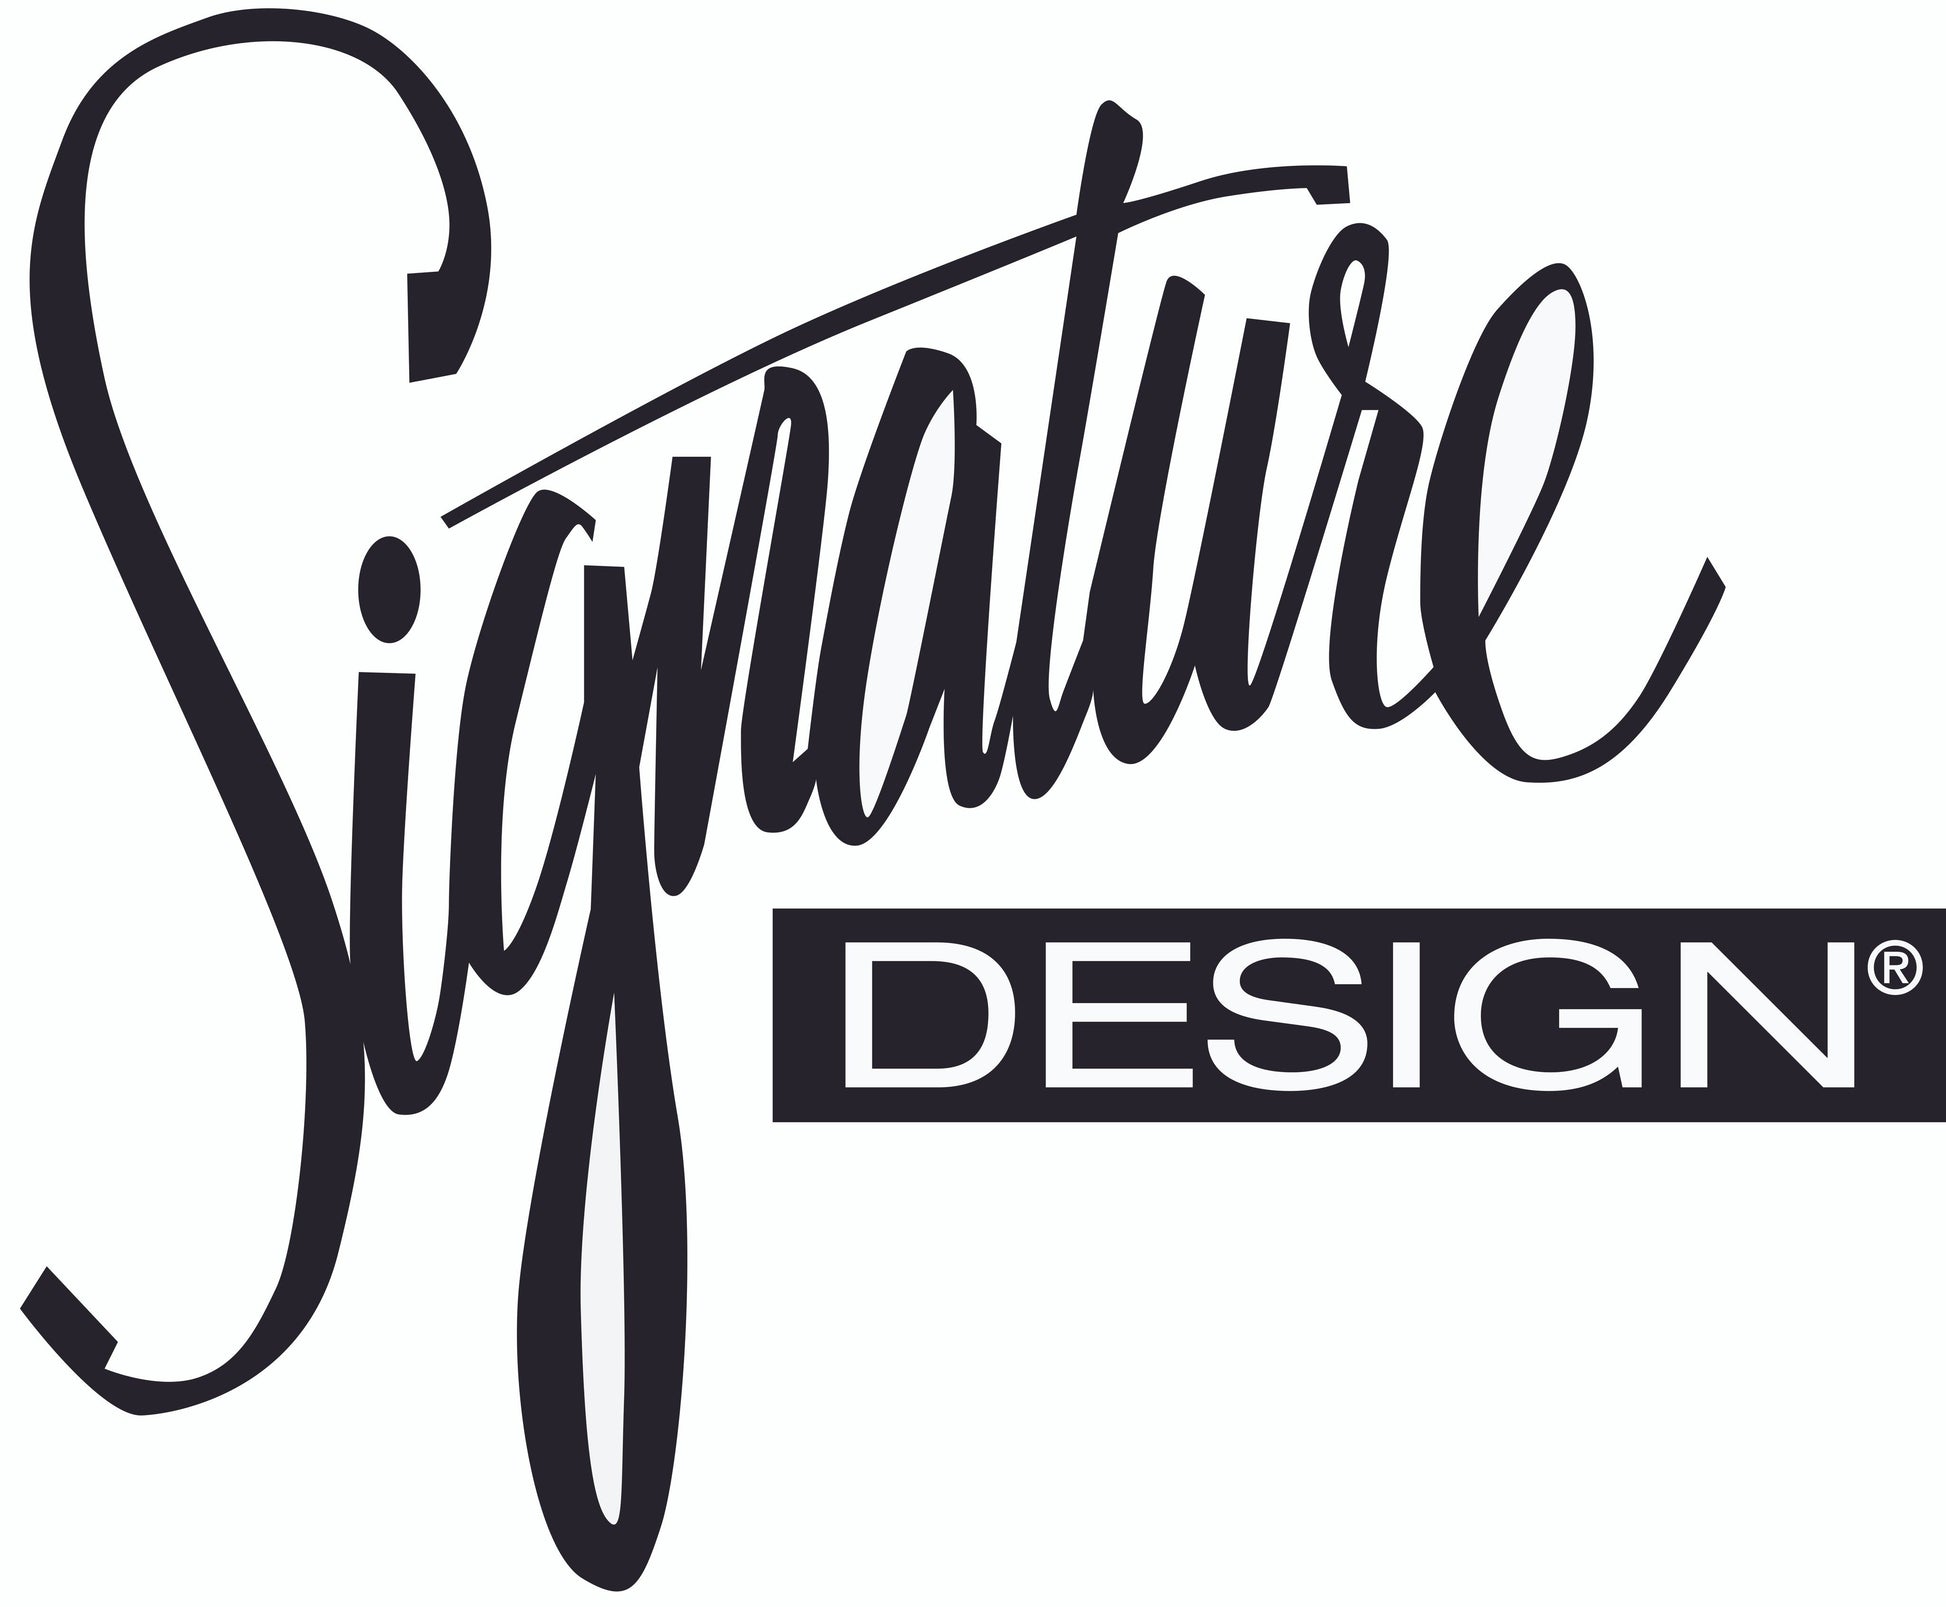 Bradney Swivel Accent Chair Signature Design by Ashley®